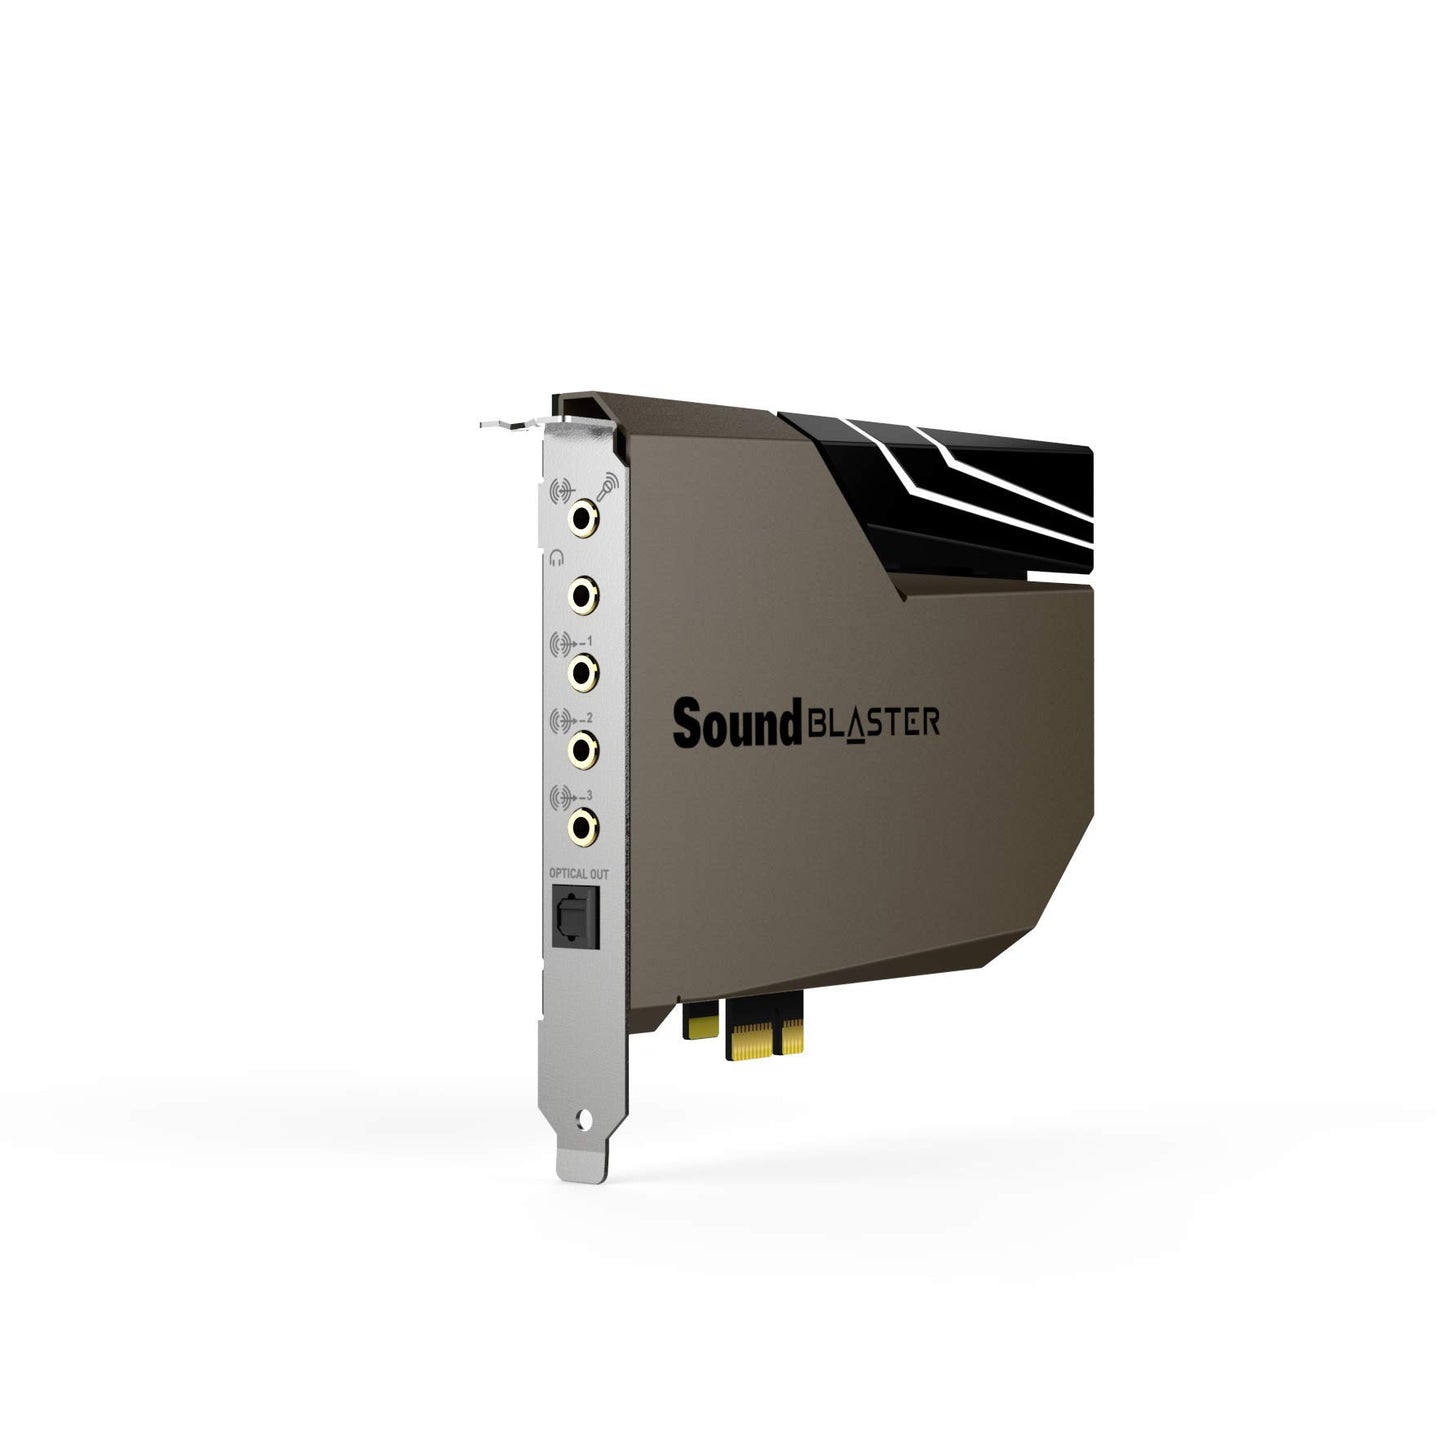 Creative Sound Blaster AE-7 - High Resolution PCI-e DAC/Amplifier Sound Card with Xamp Discreet Headphone Bi-Amplifier and Grey/Black Audio Control Module